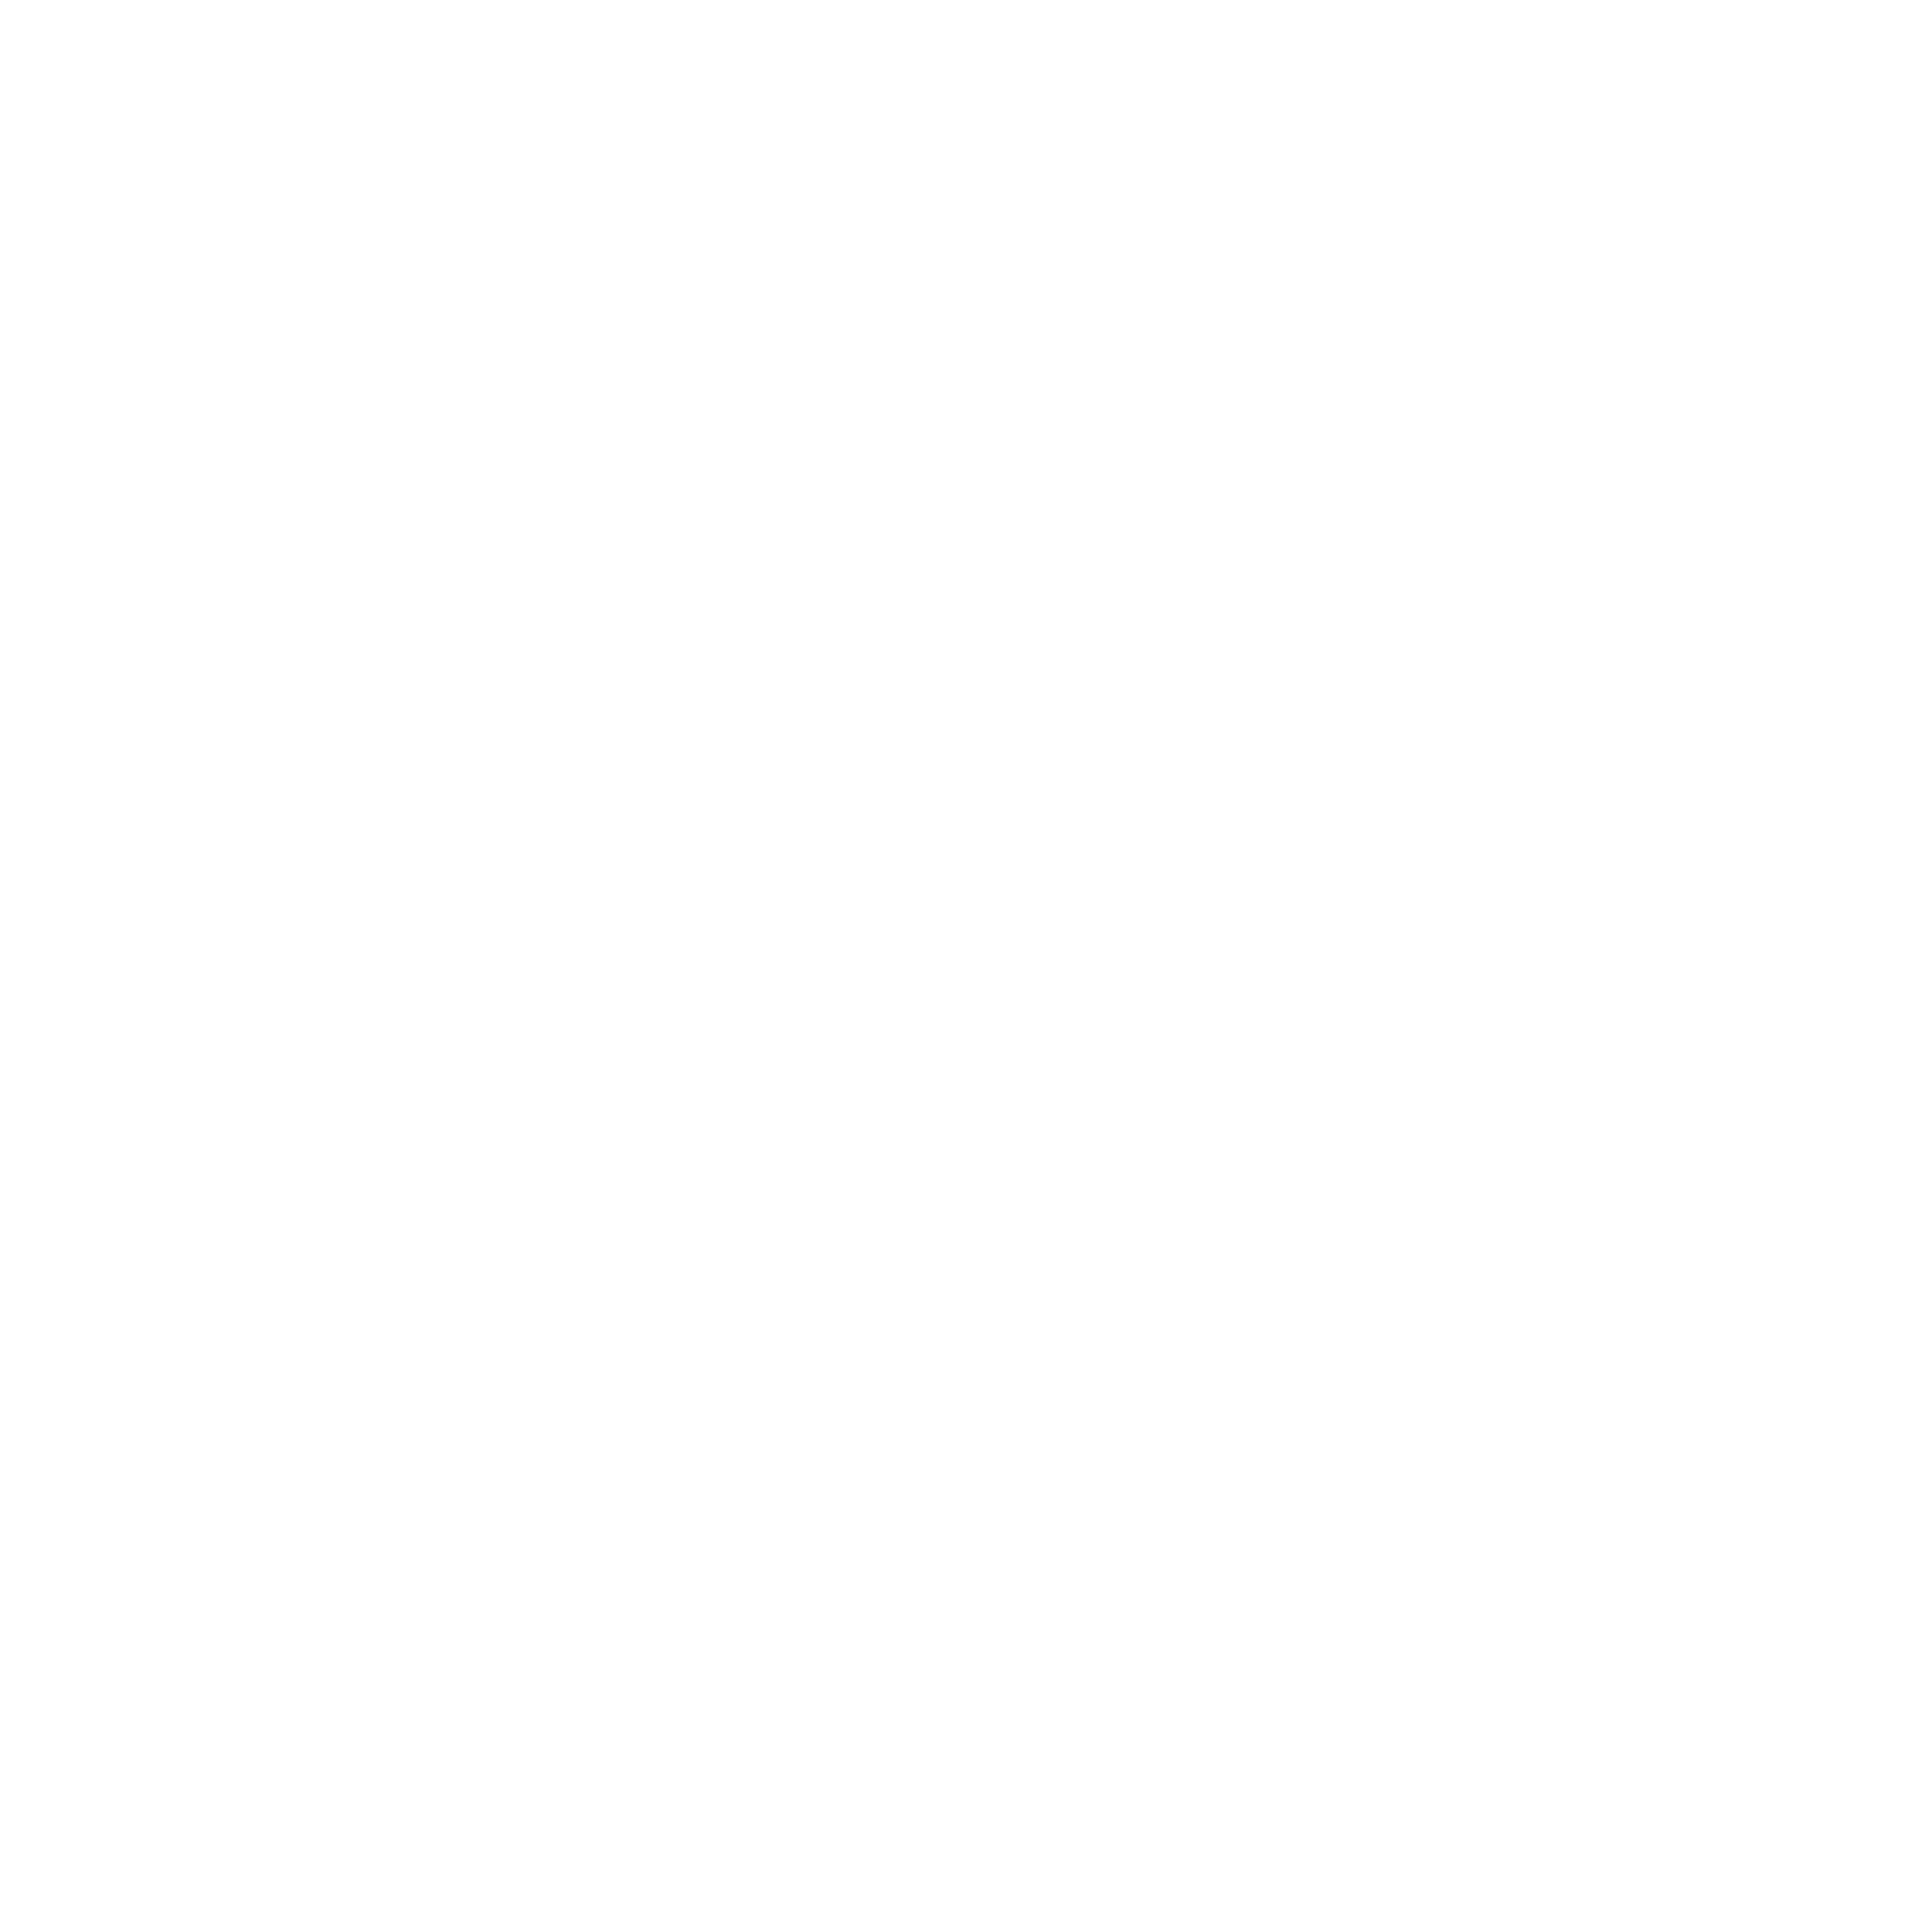 chevrolet-logo-vector-4.png